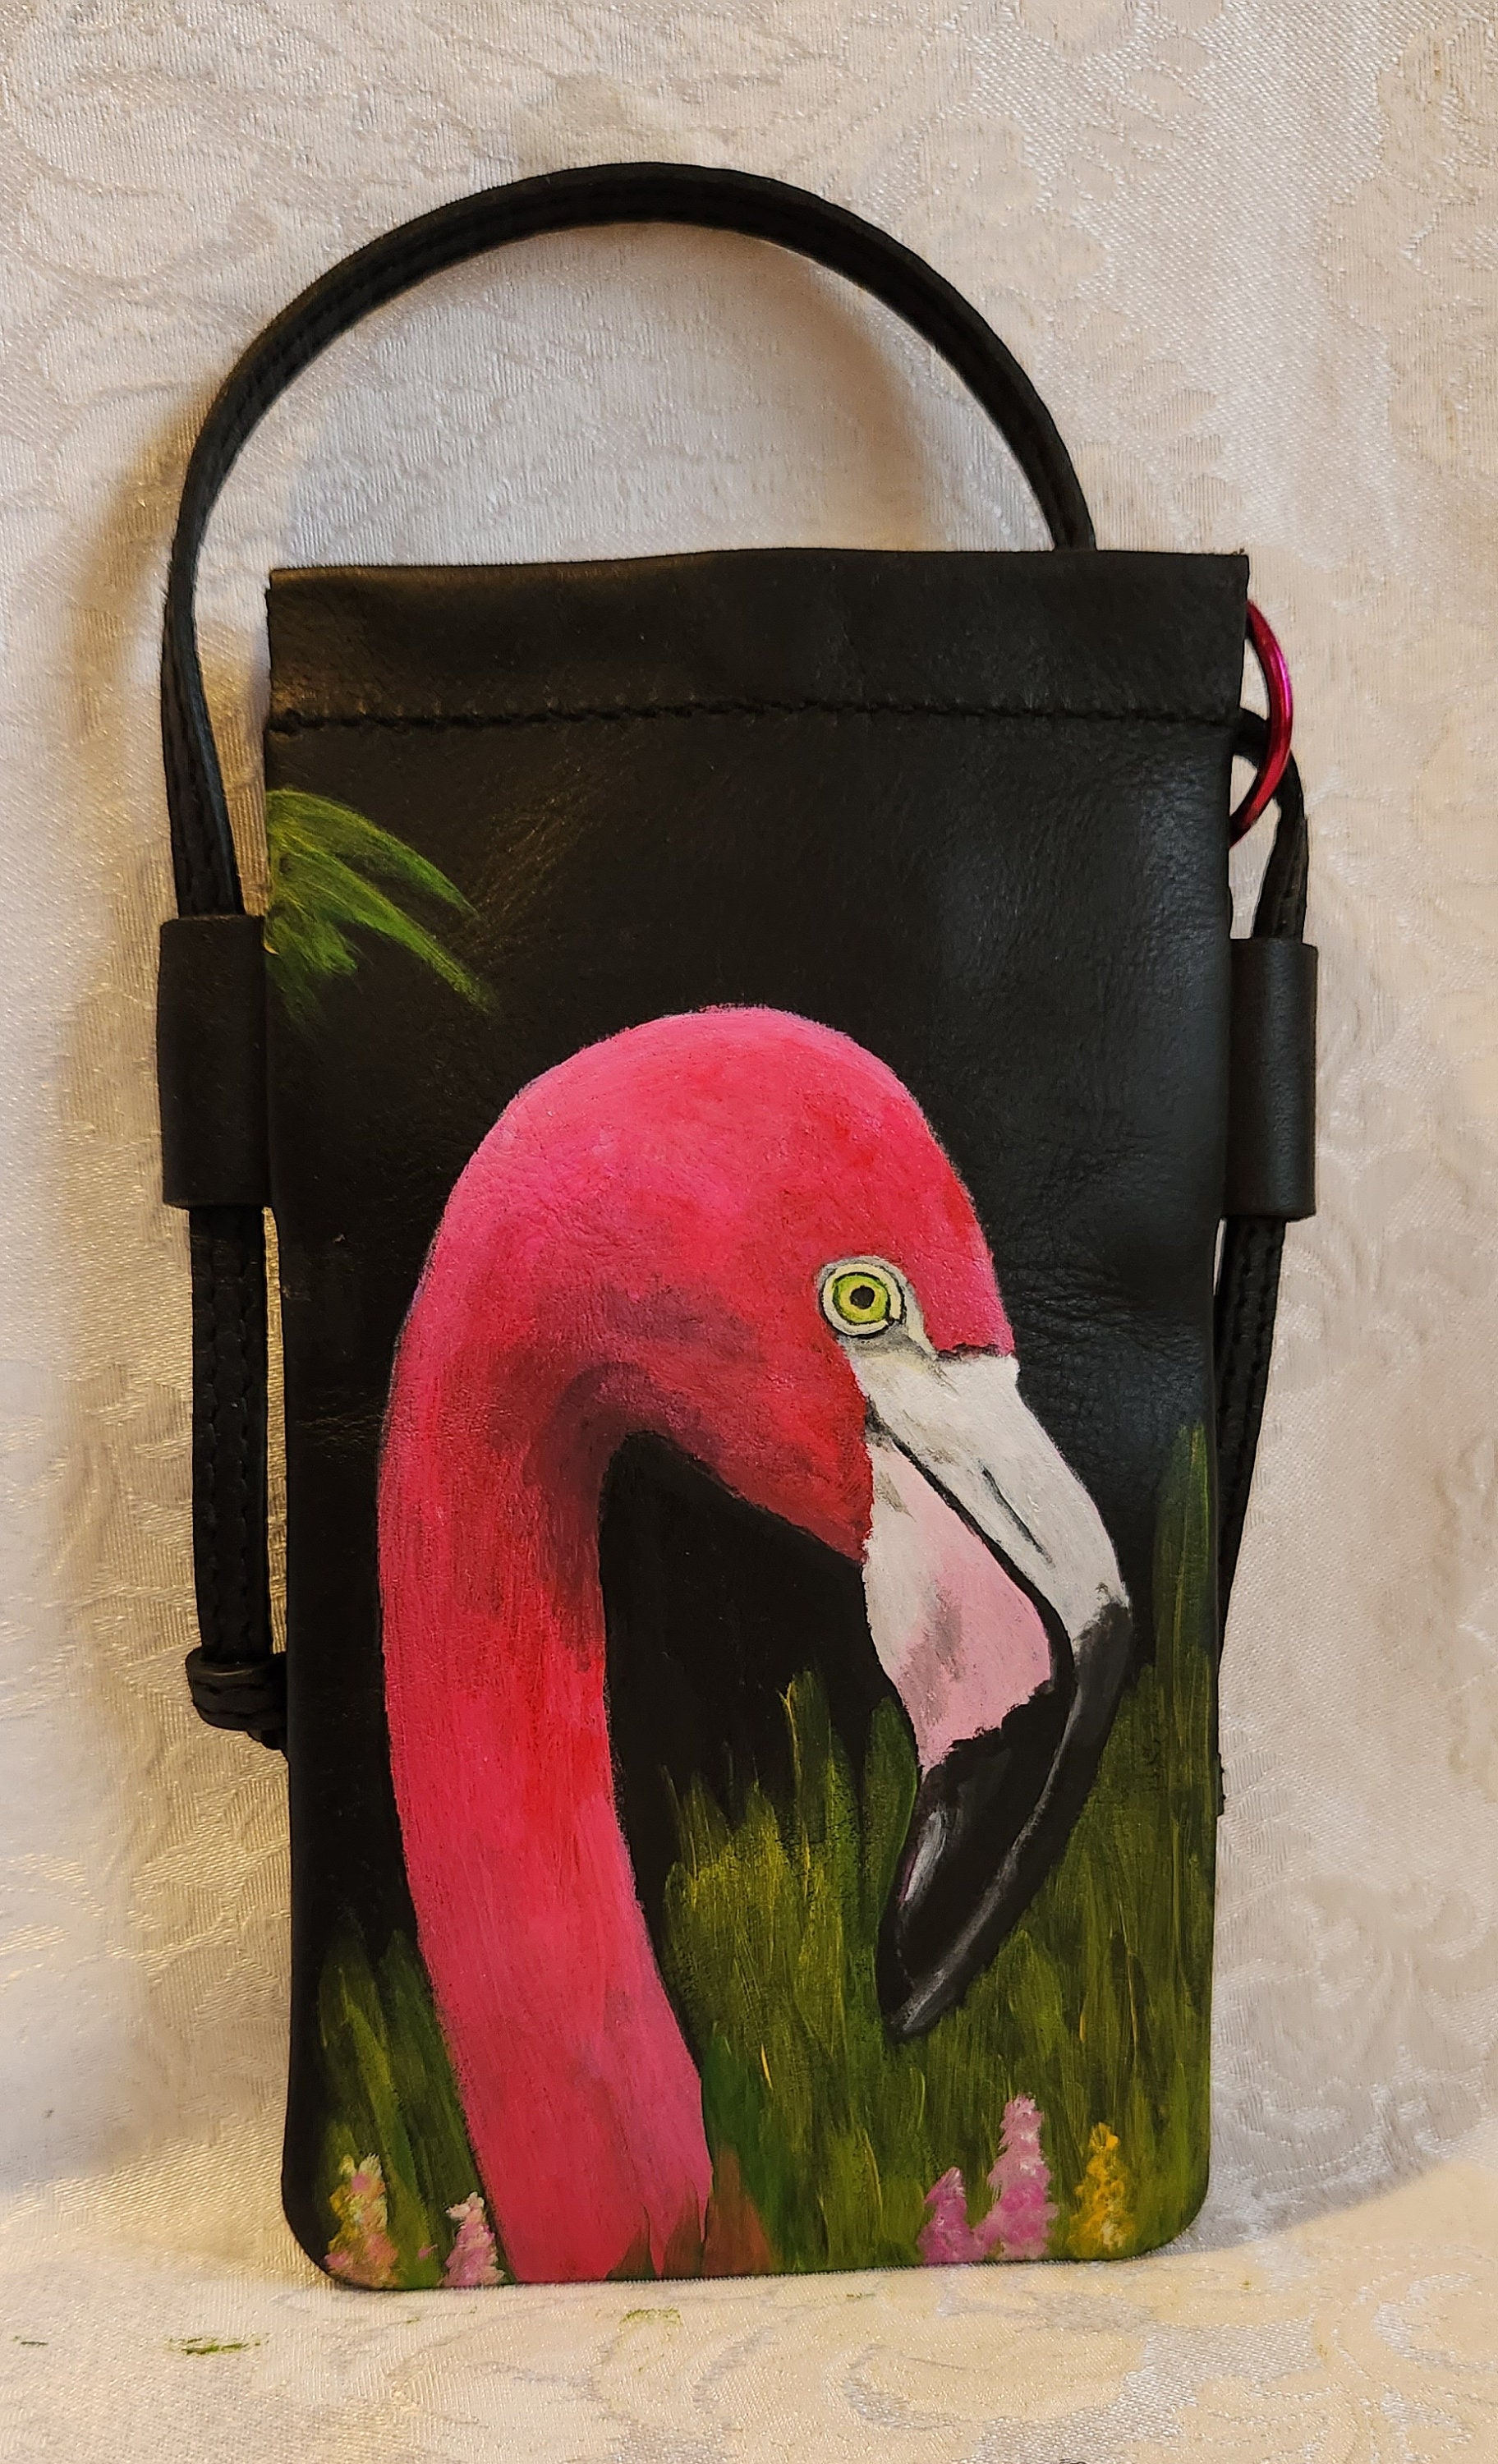 CIKER Waterproof Women Backpack Cute Bookbag Pink Flamingo Printing School  Bagpack Bag : Amazon.in: Fashion